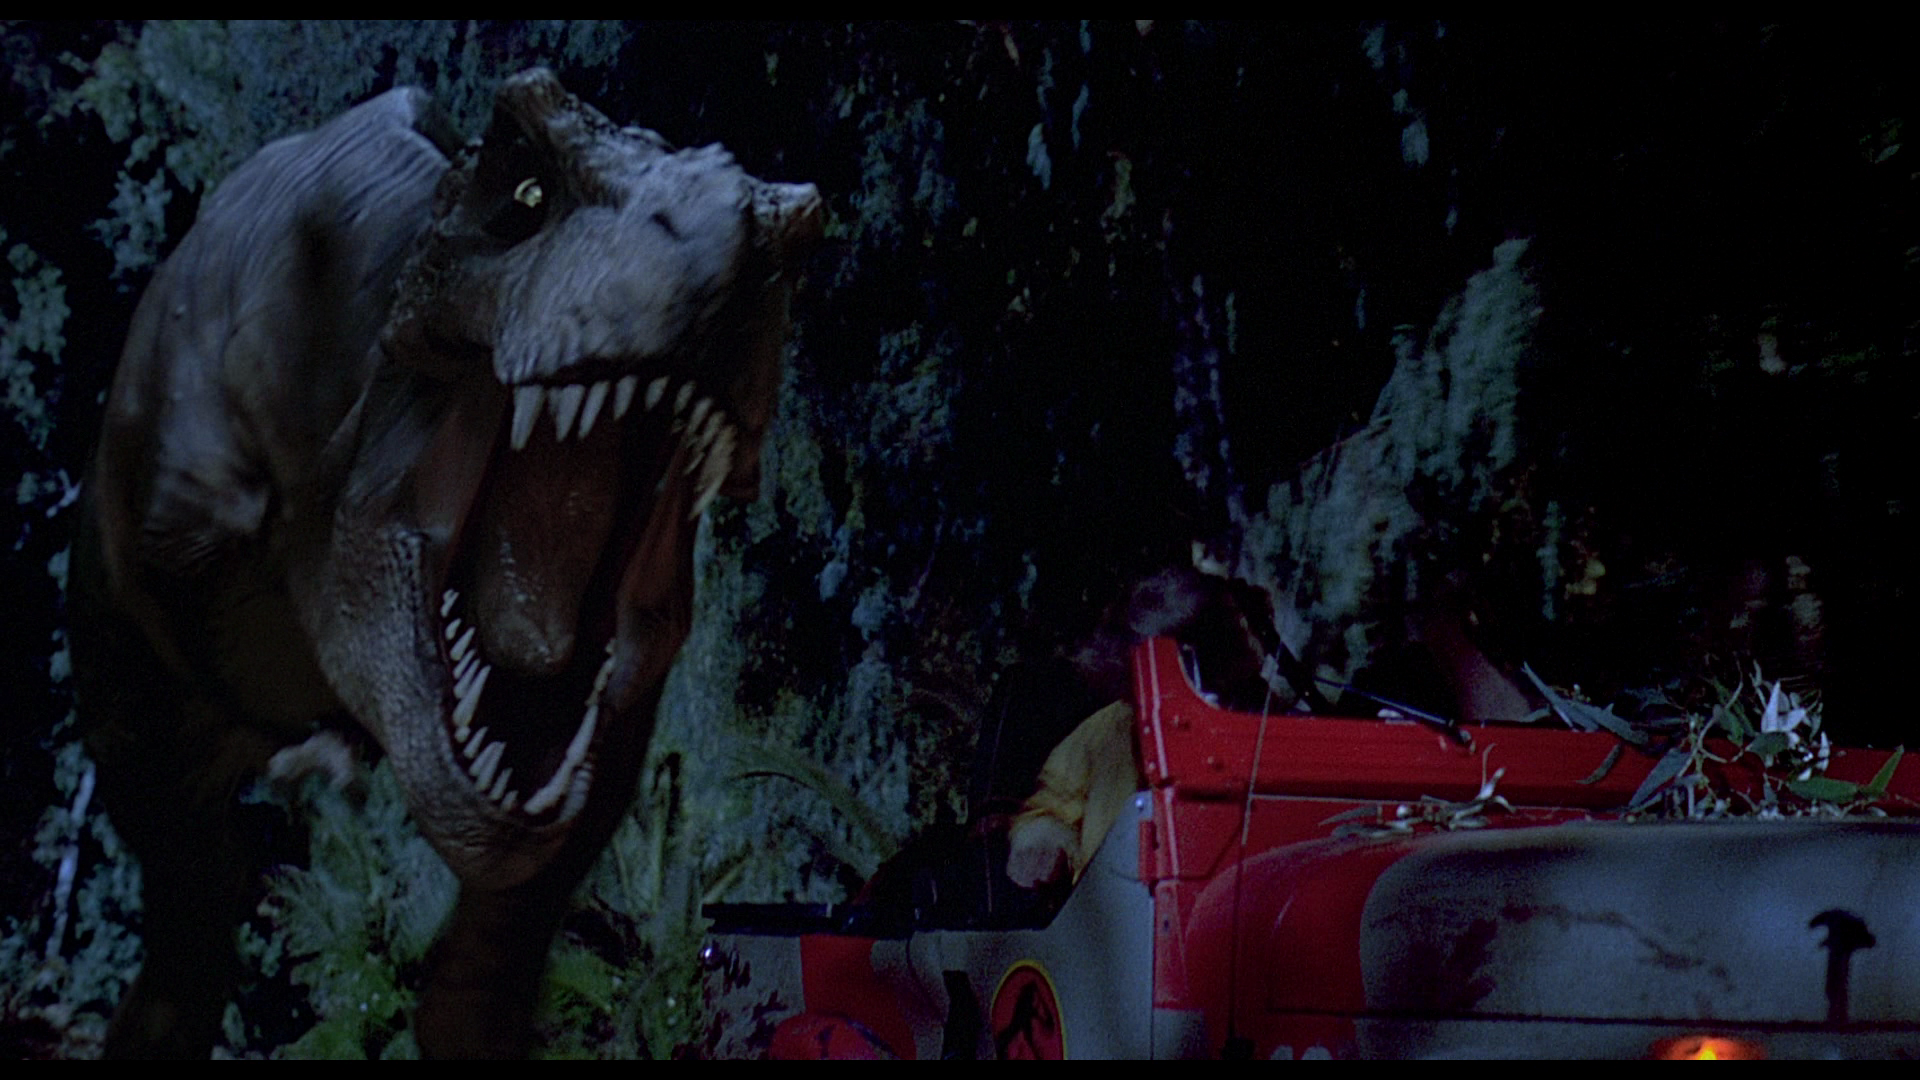 Image Jurassic Park T Rex Chasing Jeeppng Dinopedia The Free Dinosaur Encyclopedia 